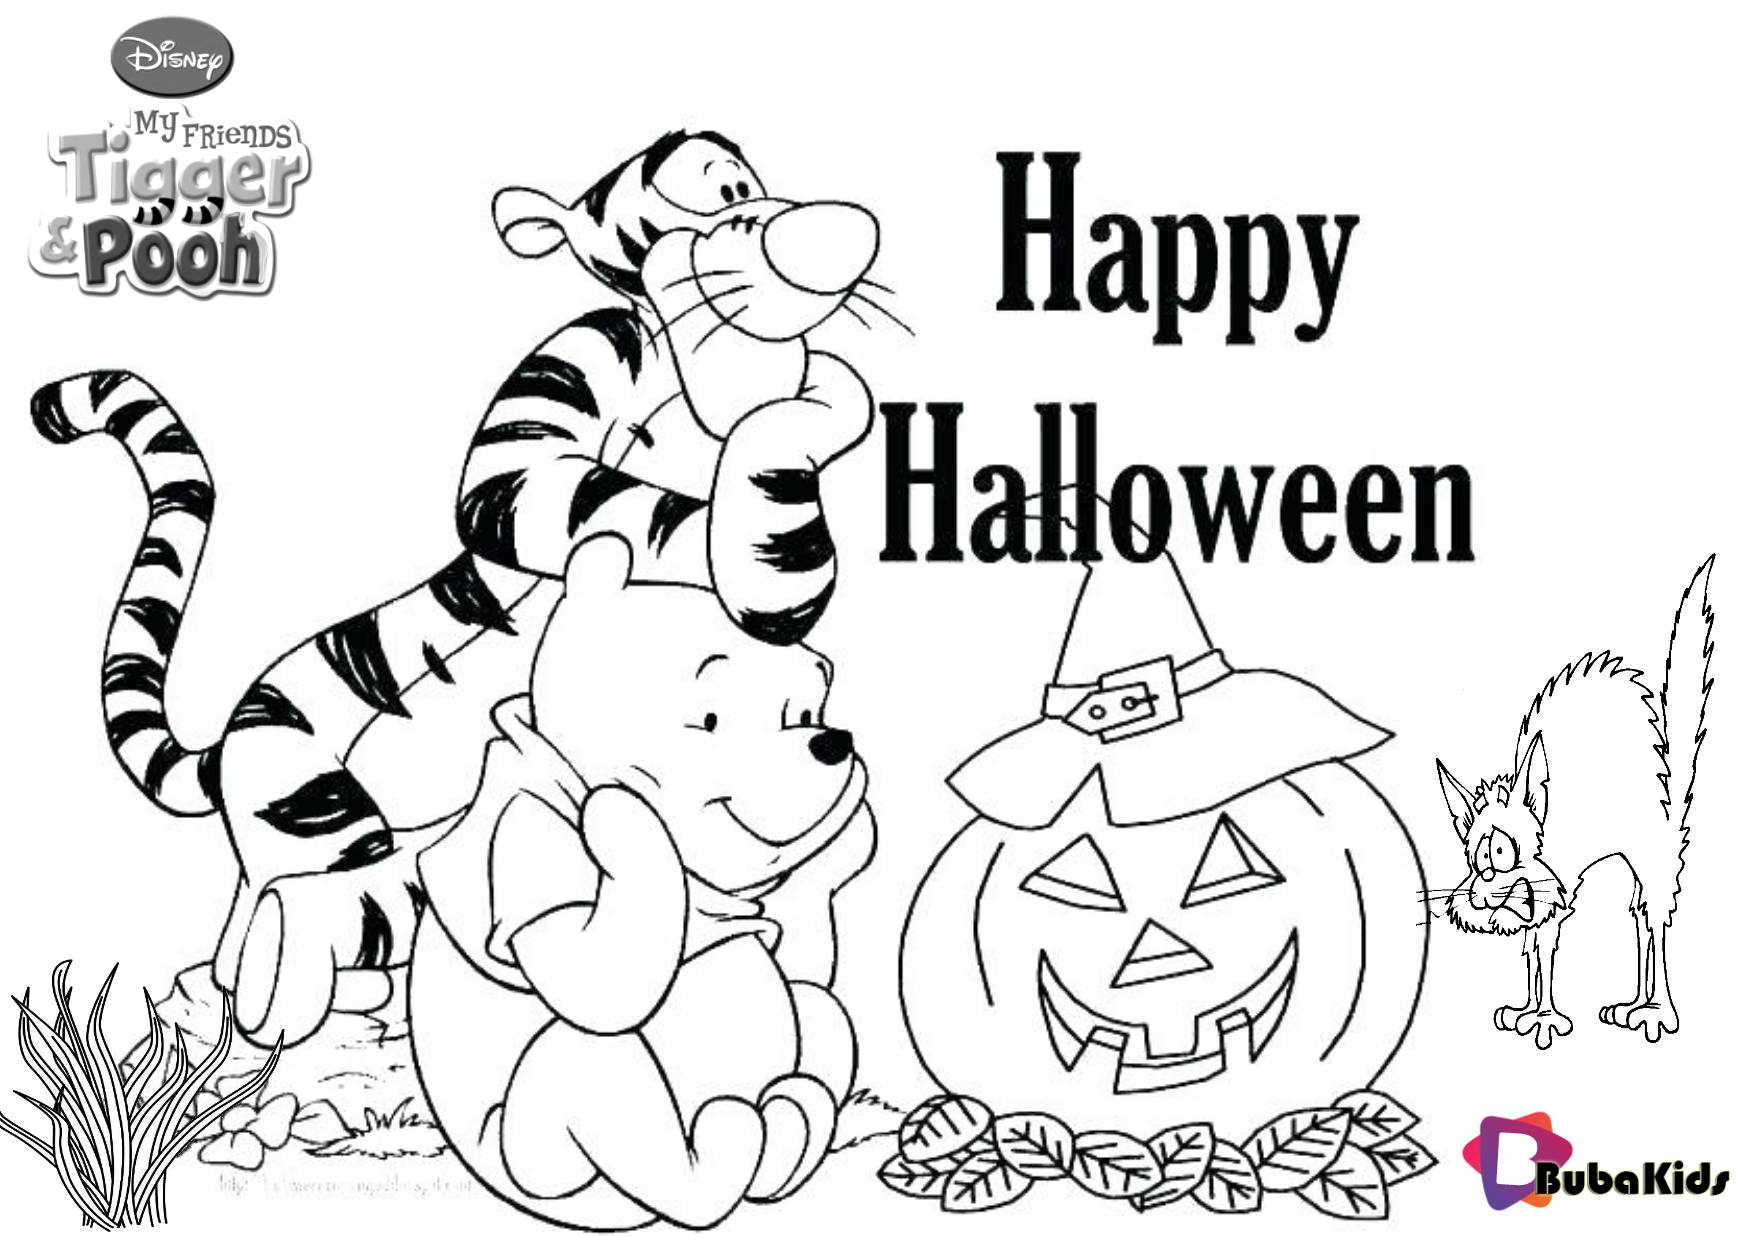 Pooh and tigger happy halloween 2019 printable coloring page. Wallpaper